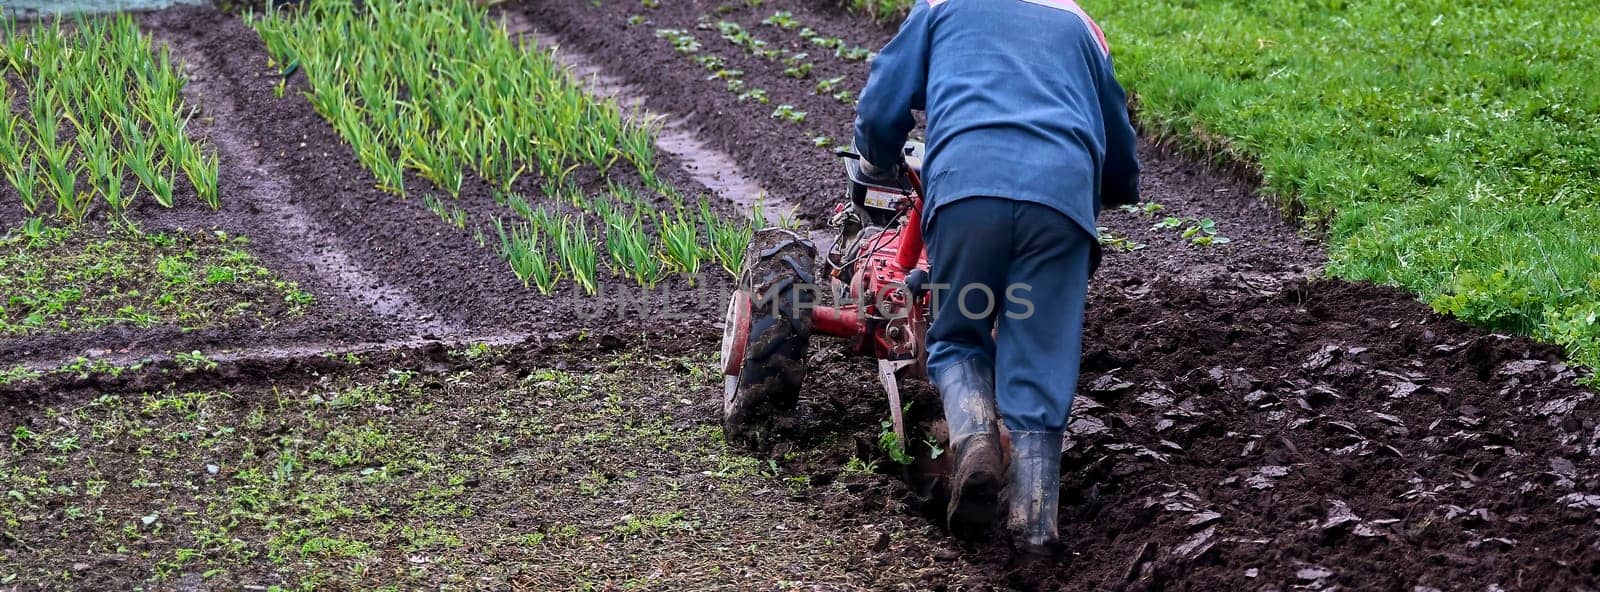 Tractor plowing field in rural area, preparing soil for planting season by Hil